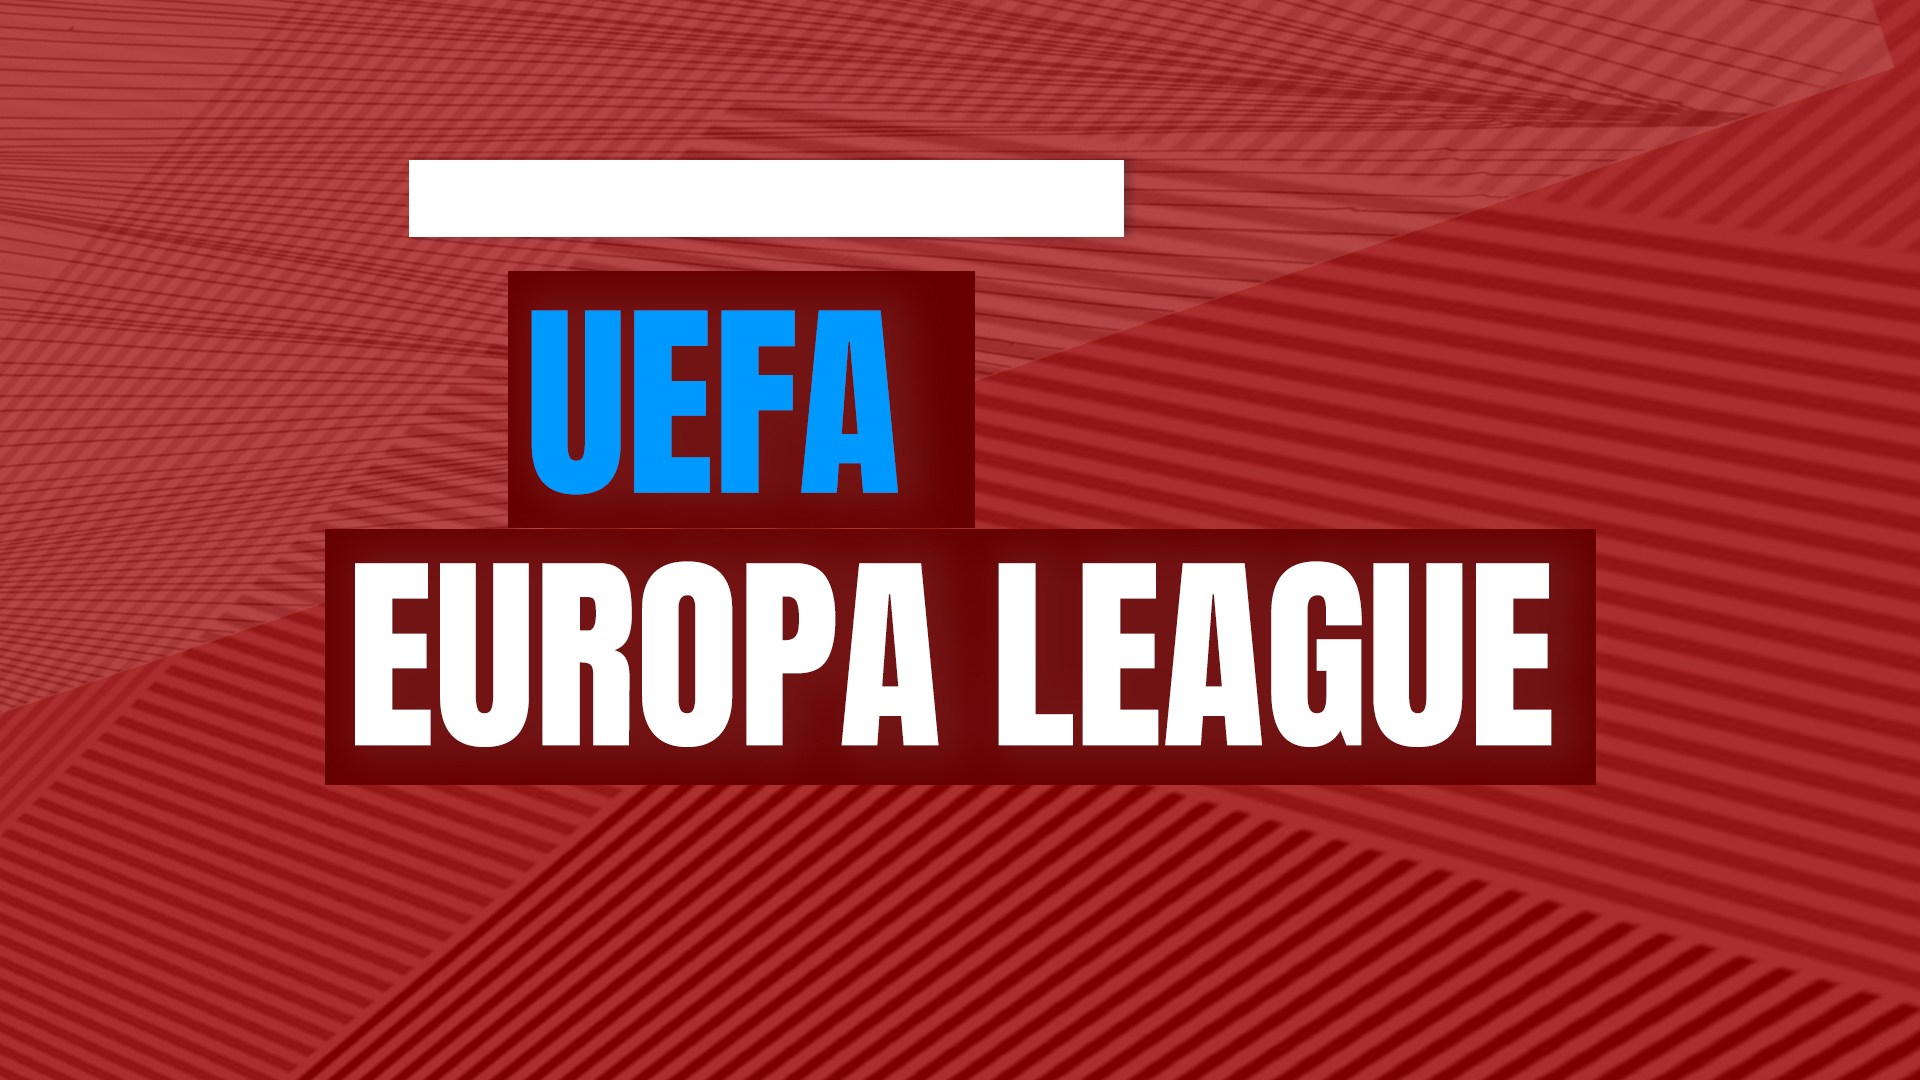 League europa standings conference UEFA Europa